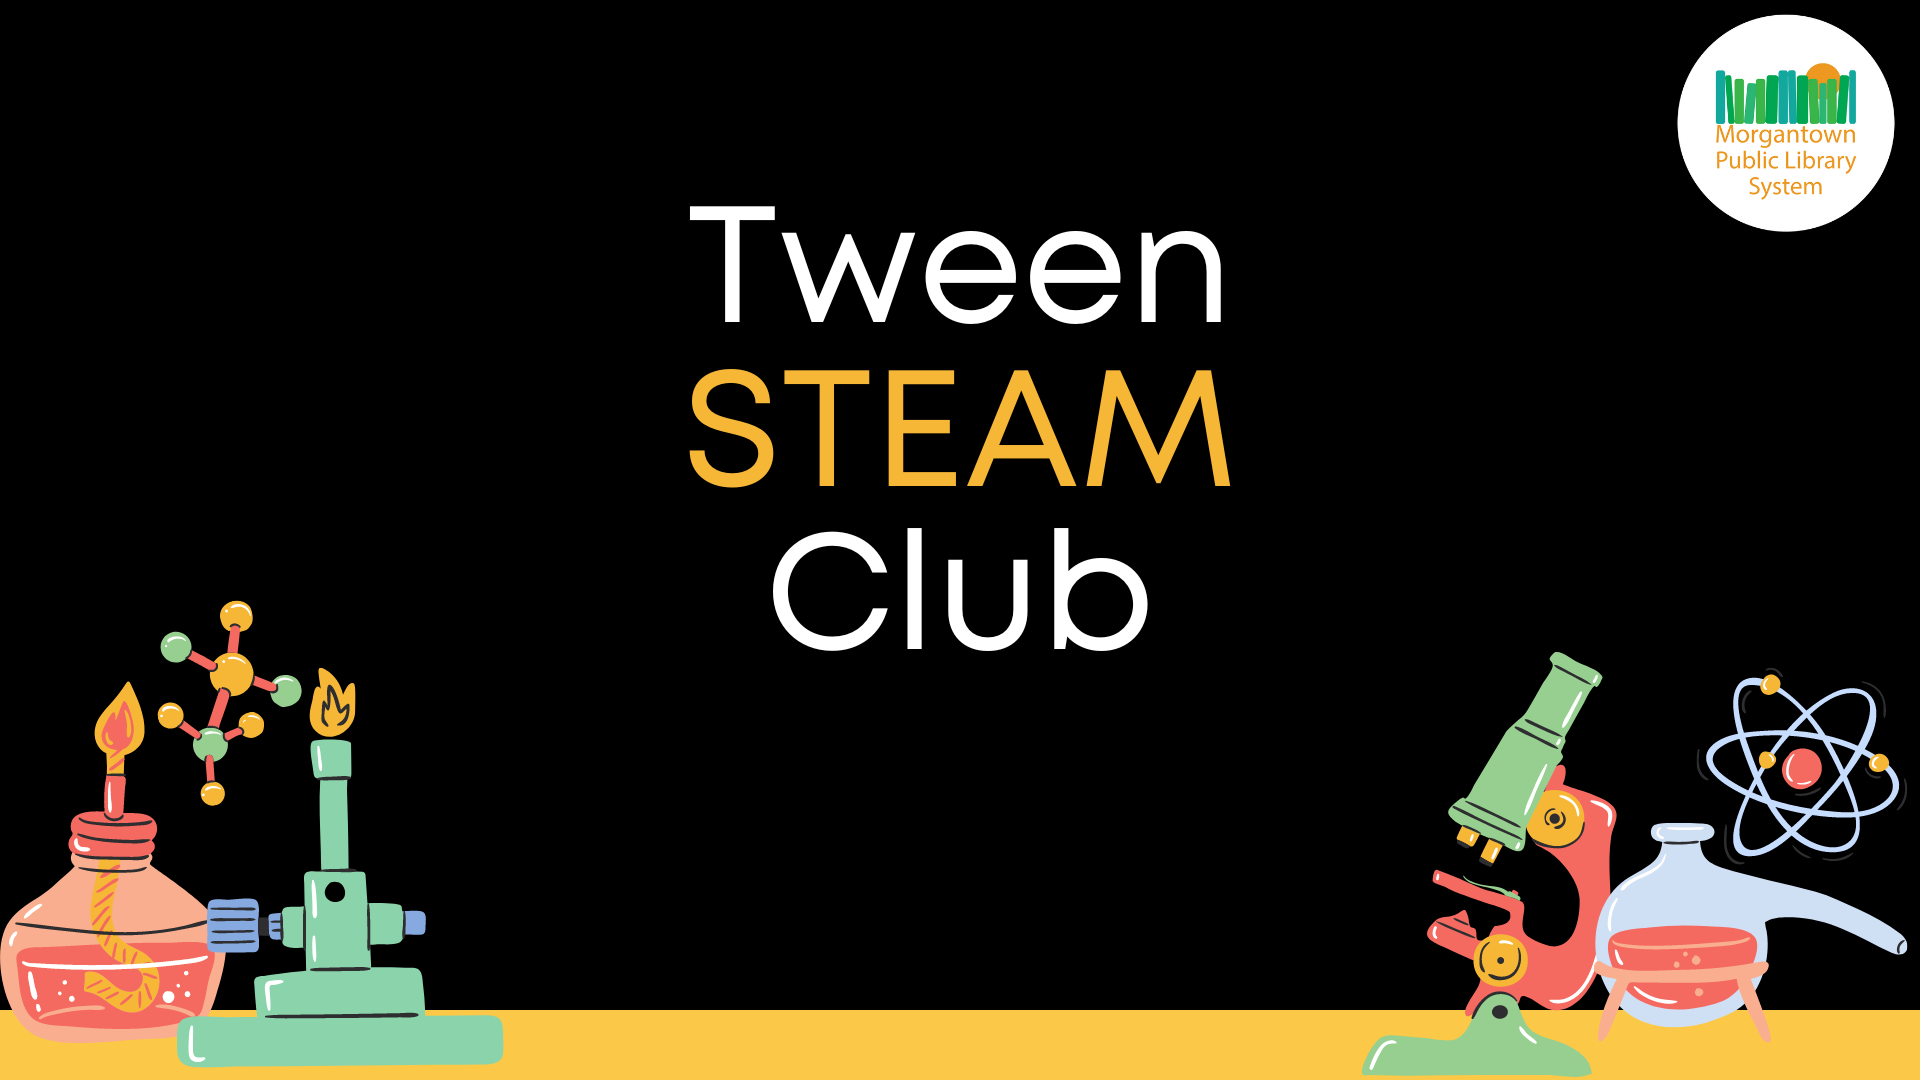 Tween STEAM Club. Cartoon science experiment tools.